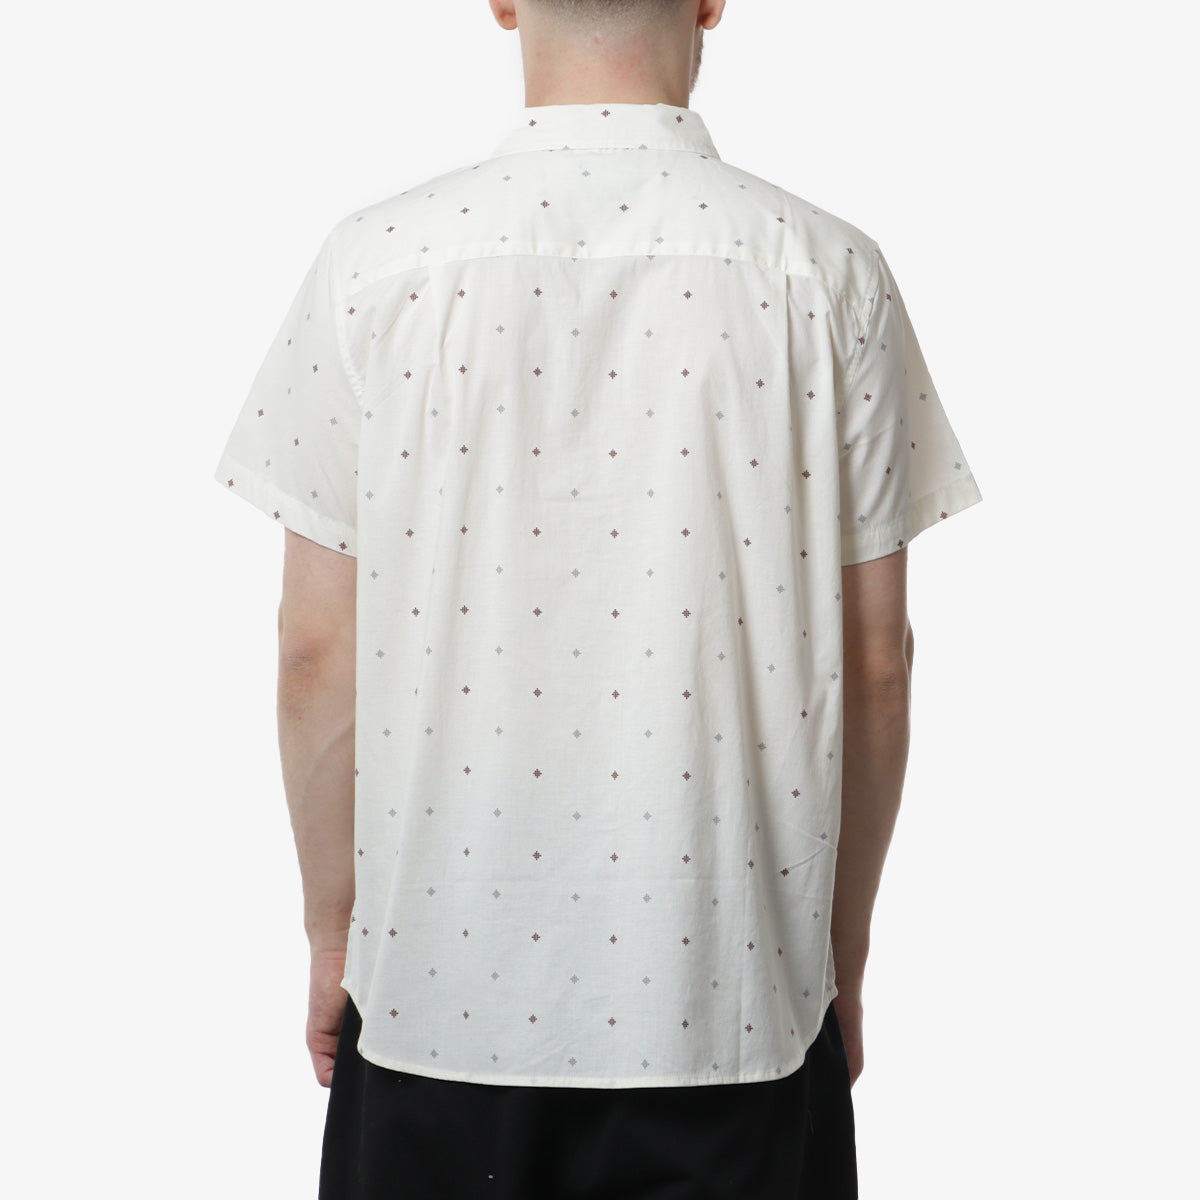 Brixton Charter Print Woven Shirt, Off White Pyramid, Detail Shot 3